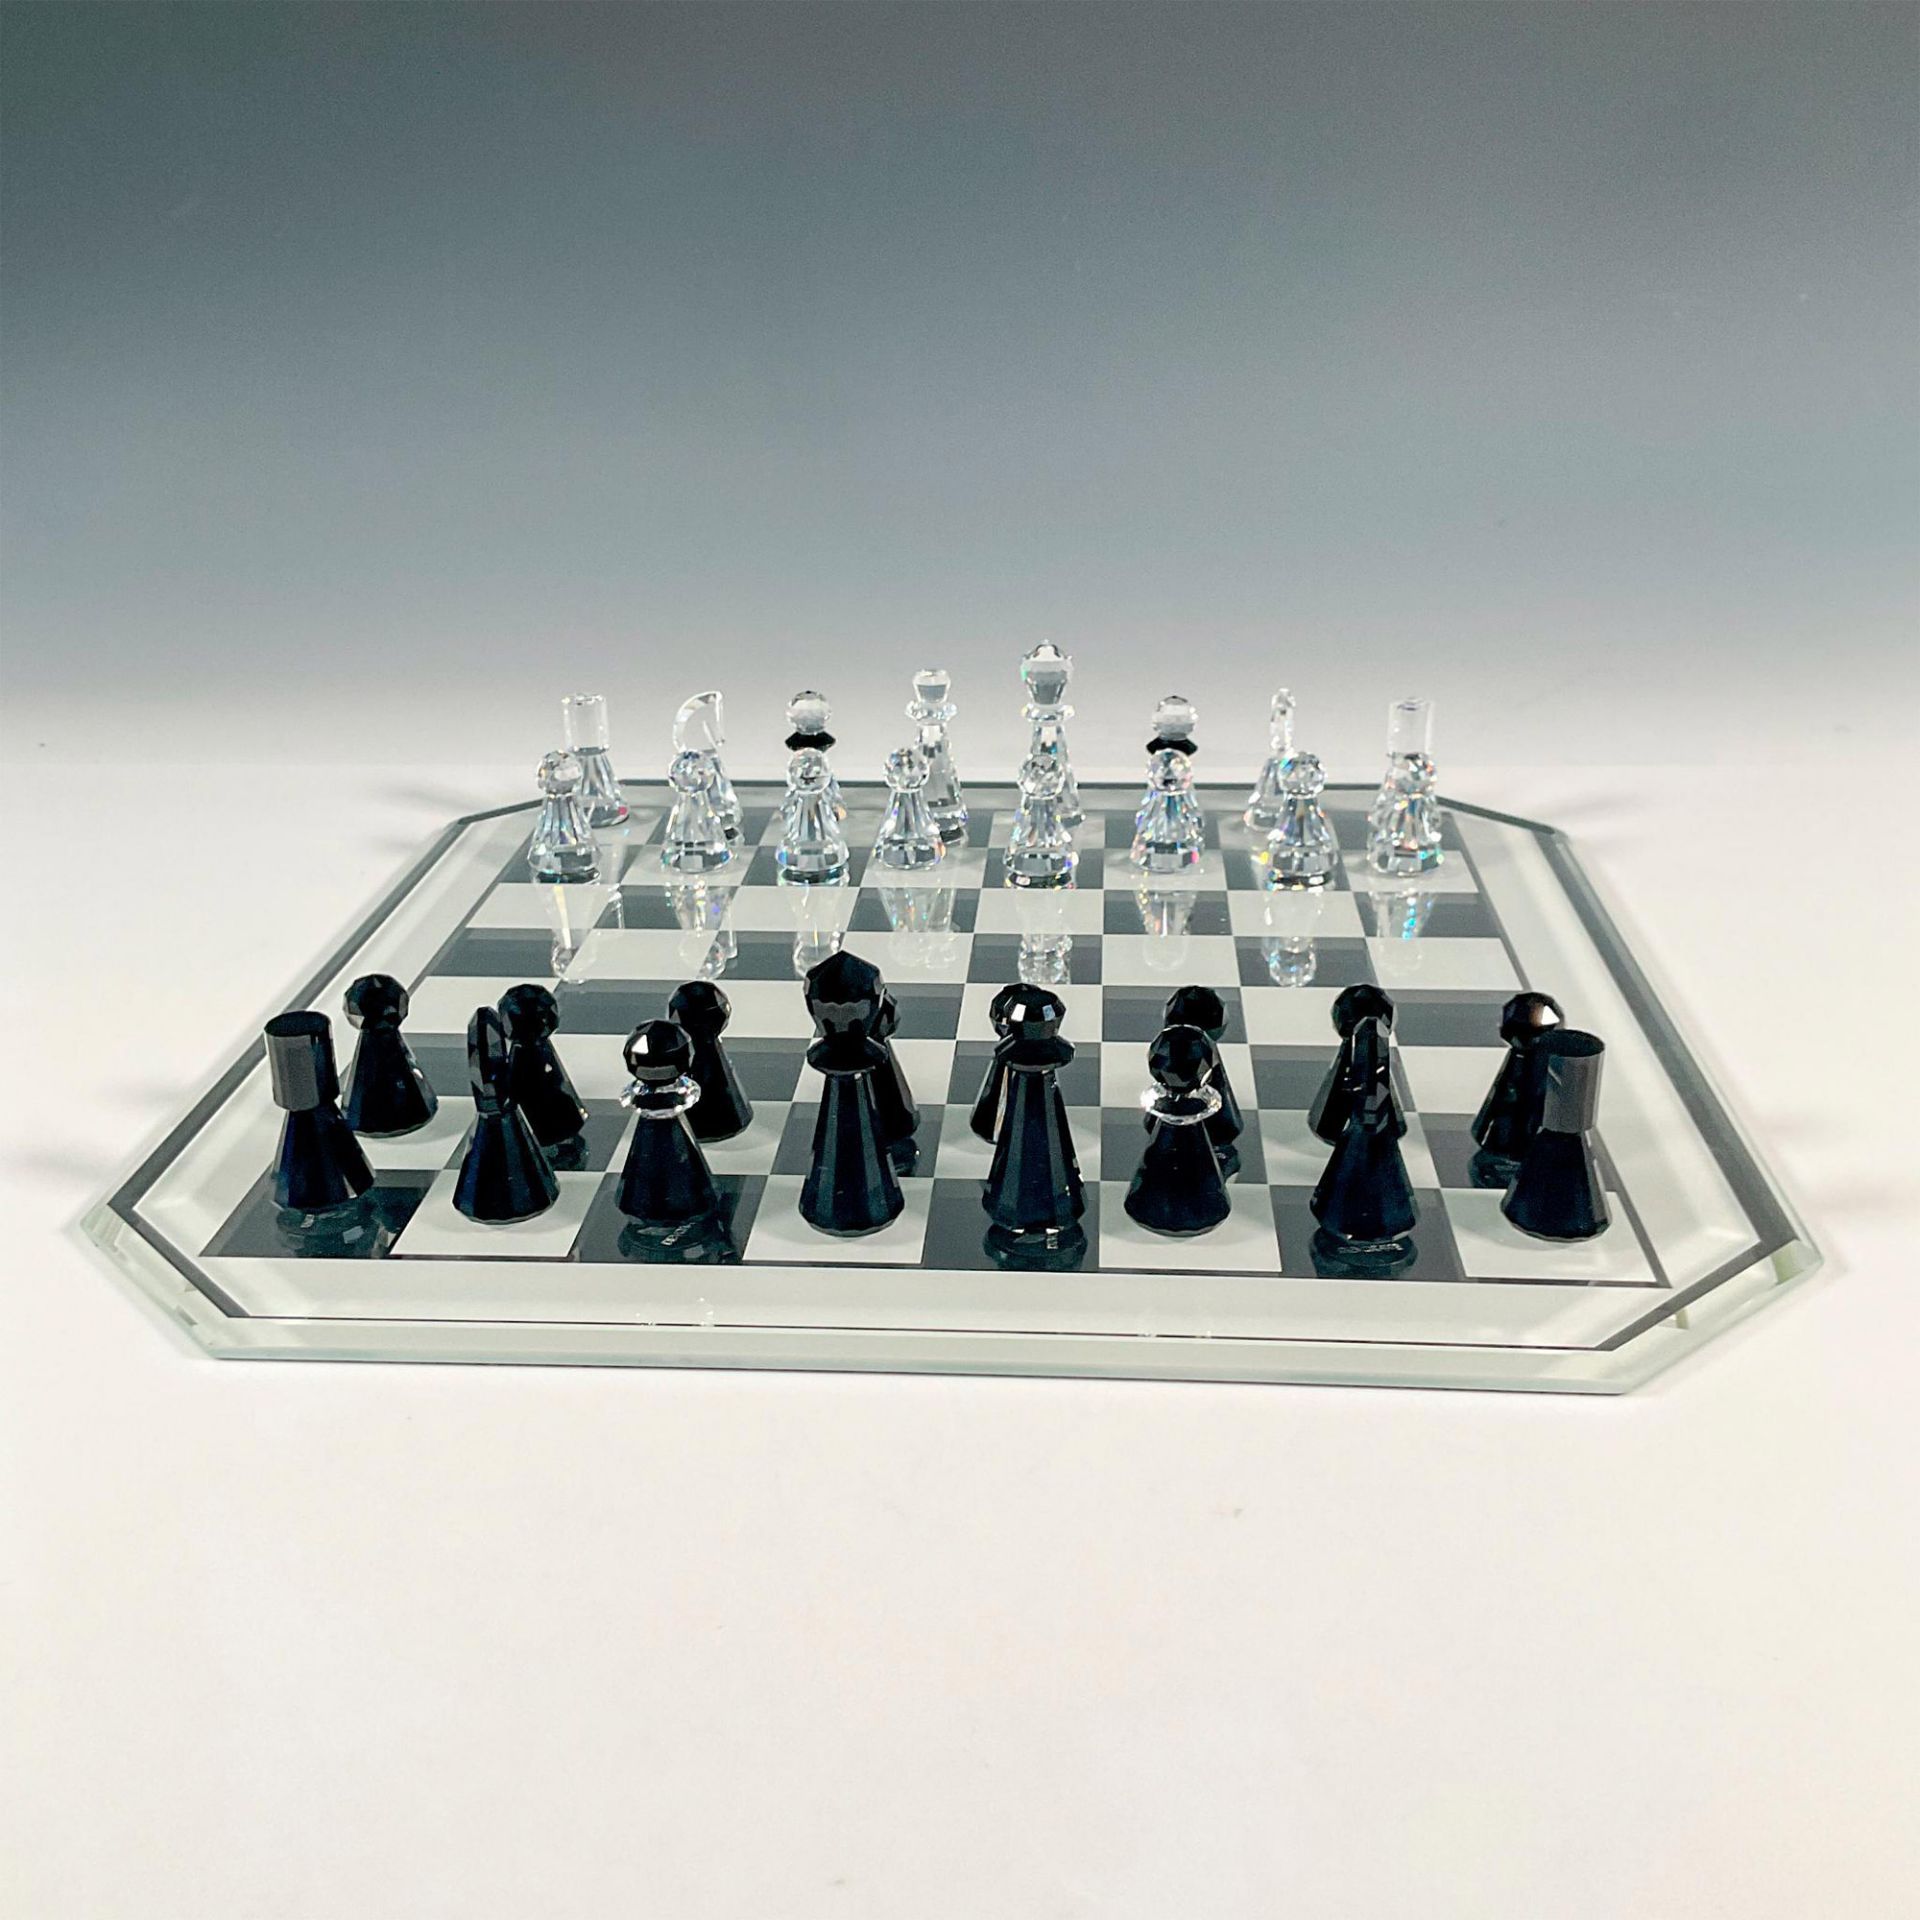 33pc Swarovski Silver Crystal Chess Set - Image 2 of 5